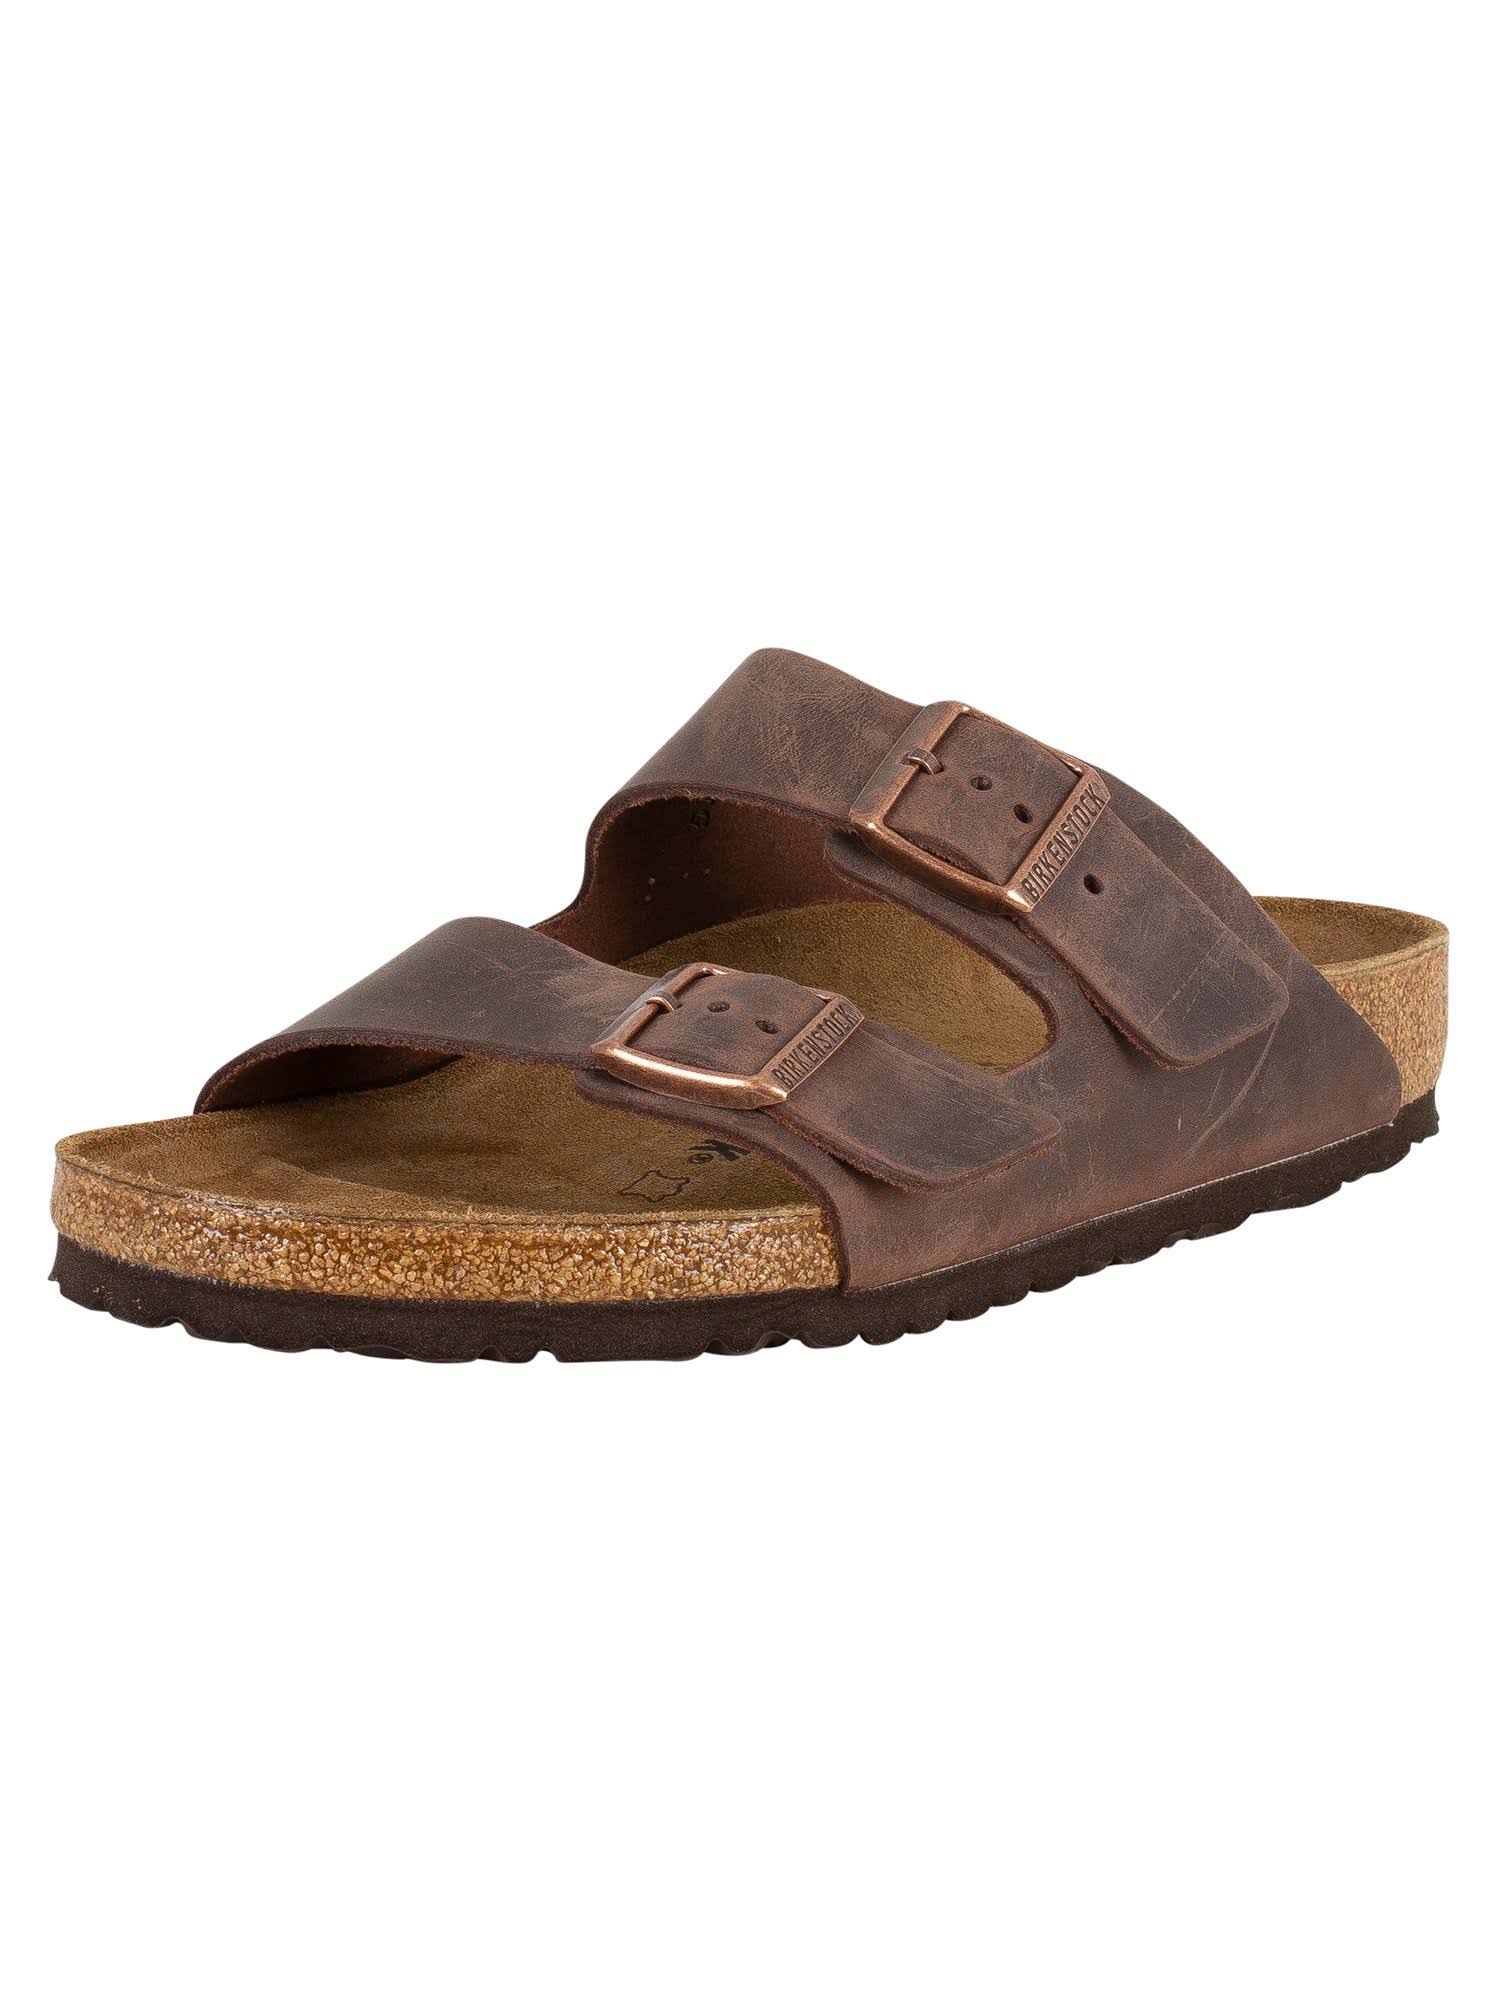 Birkenstock Men's Arizona Sandals - Habana Oiled Leather, Size 10 US